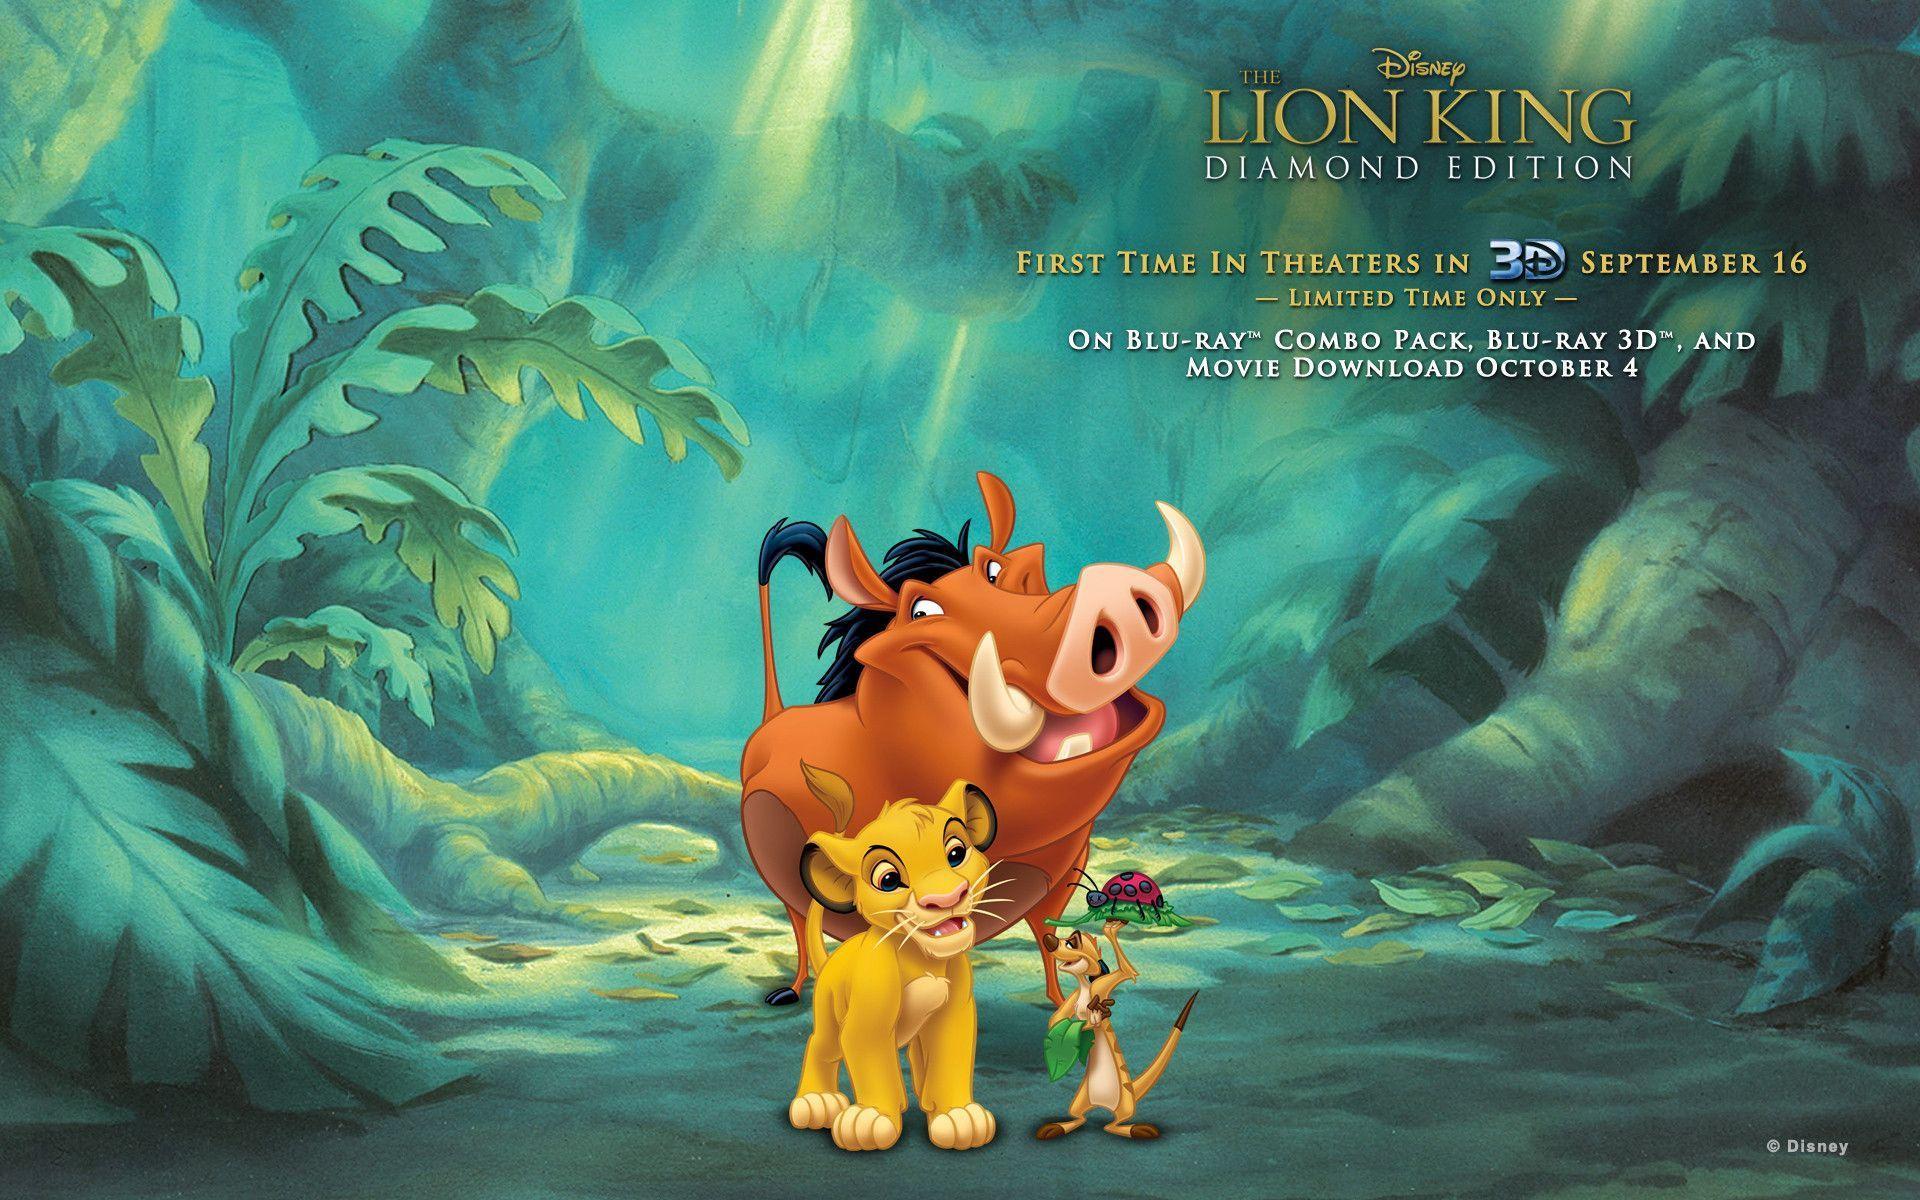 Timon & Pumbaa - The Lion King Photo (13191536) - Fanpop